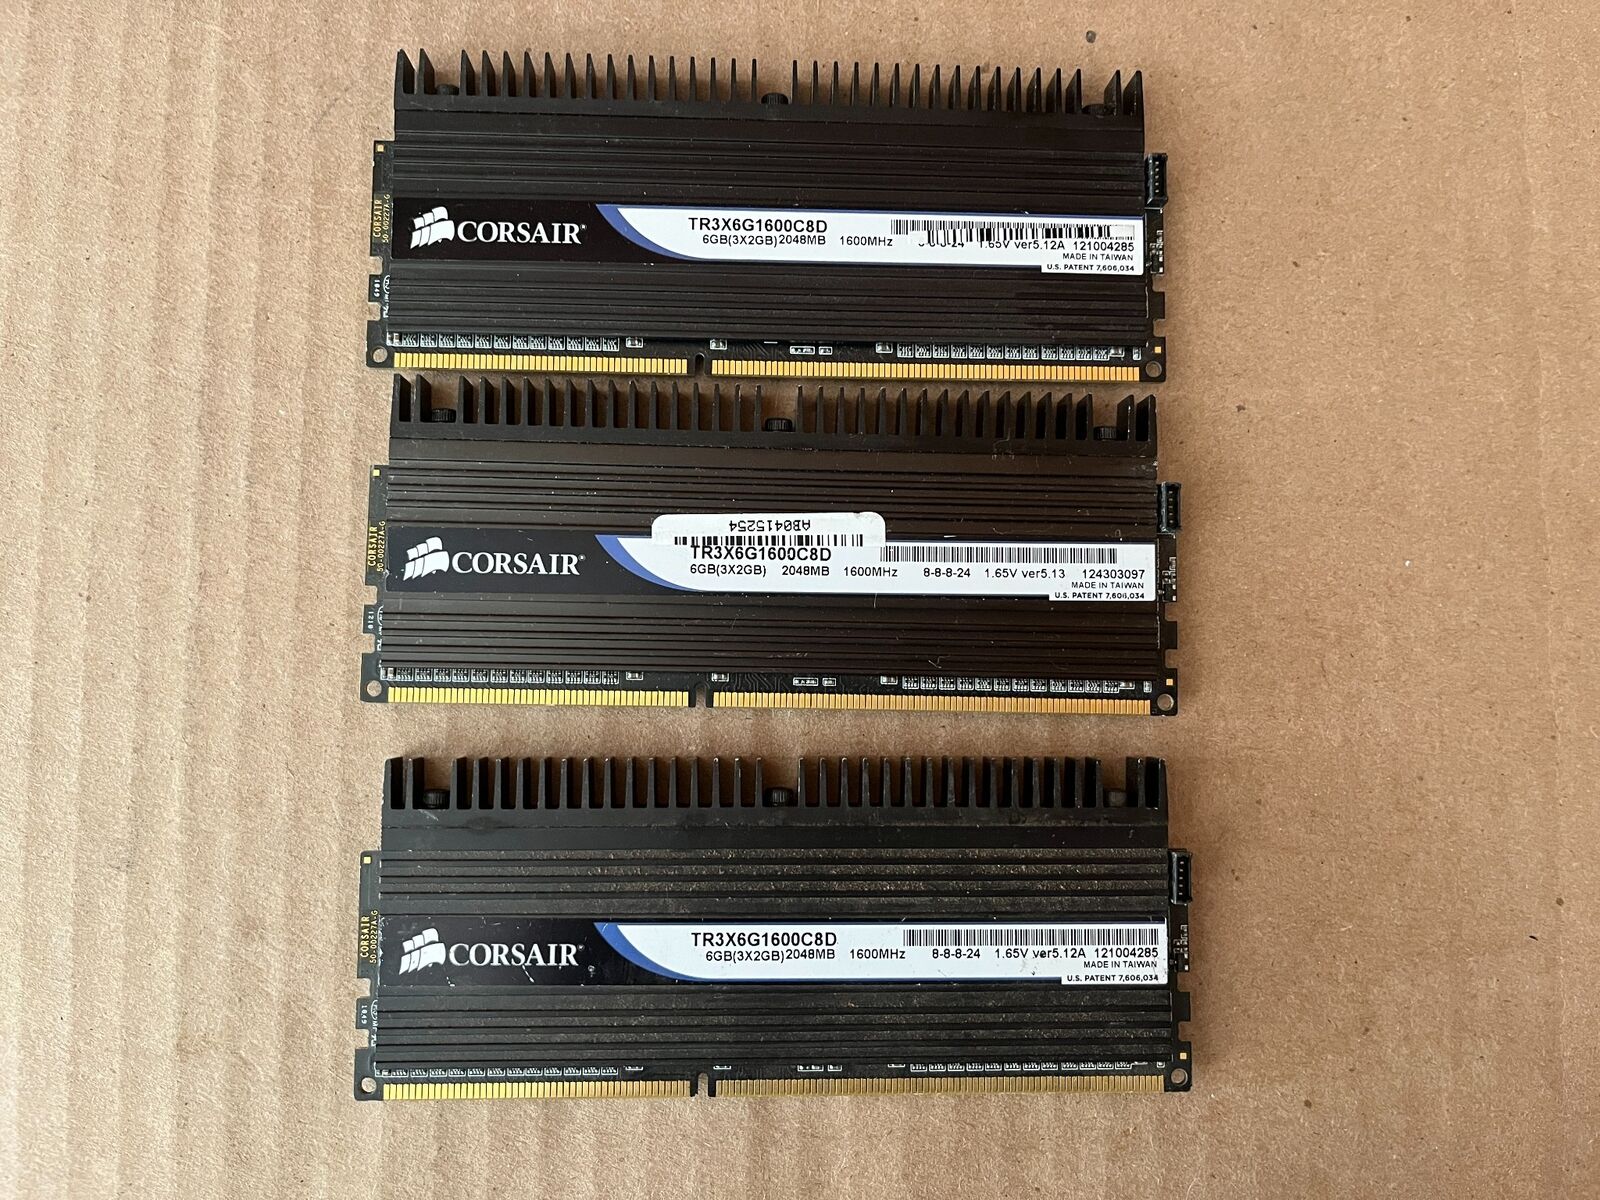 CORSAIR DOMINATOR TR3X6G1600C8D 6GB (3X2GB) 1600MHZ DDR3 TRIPLE CHANNEL J8-4(3)